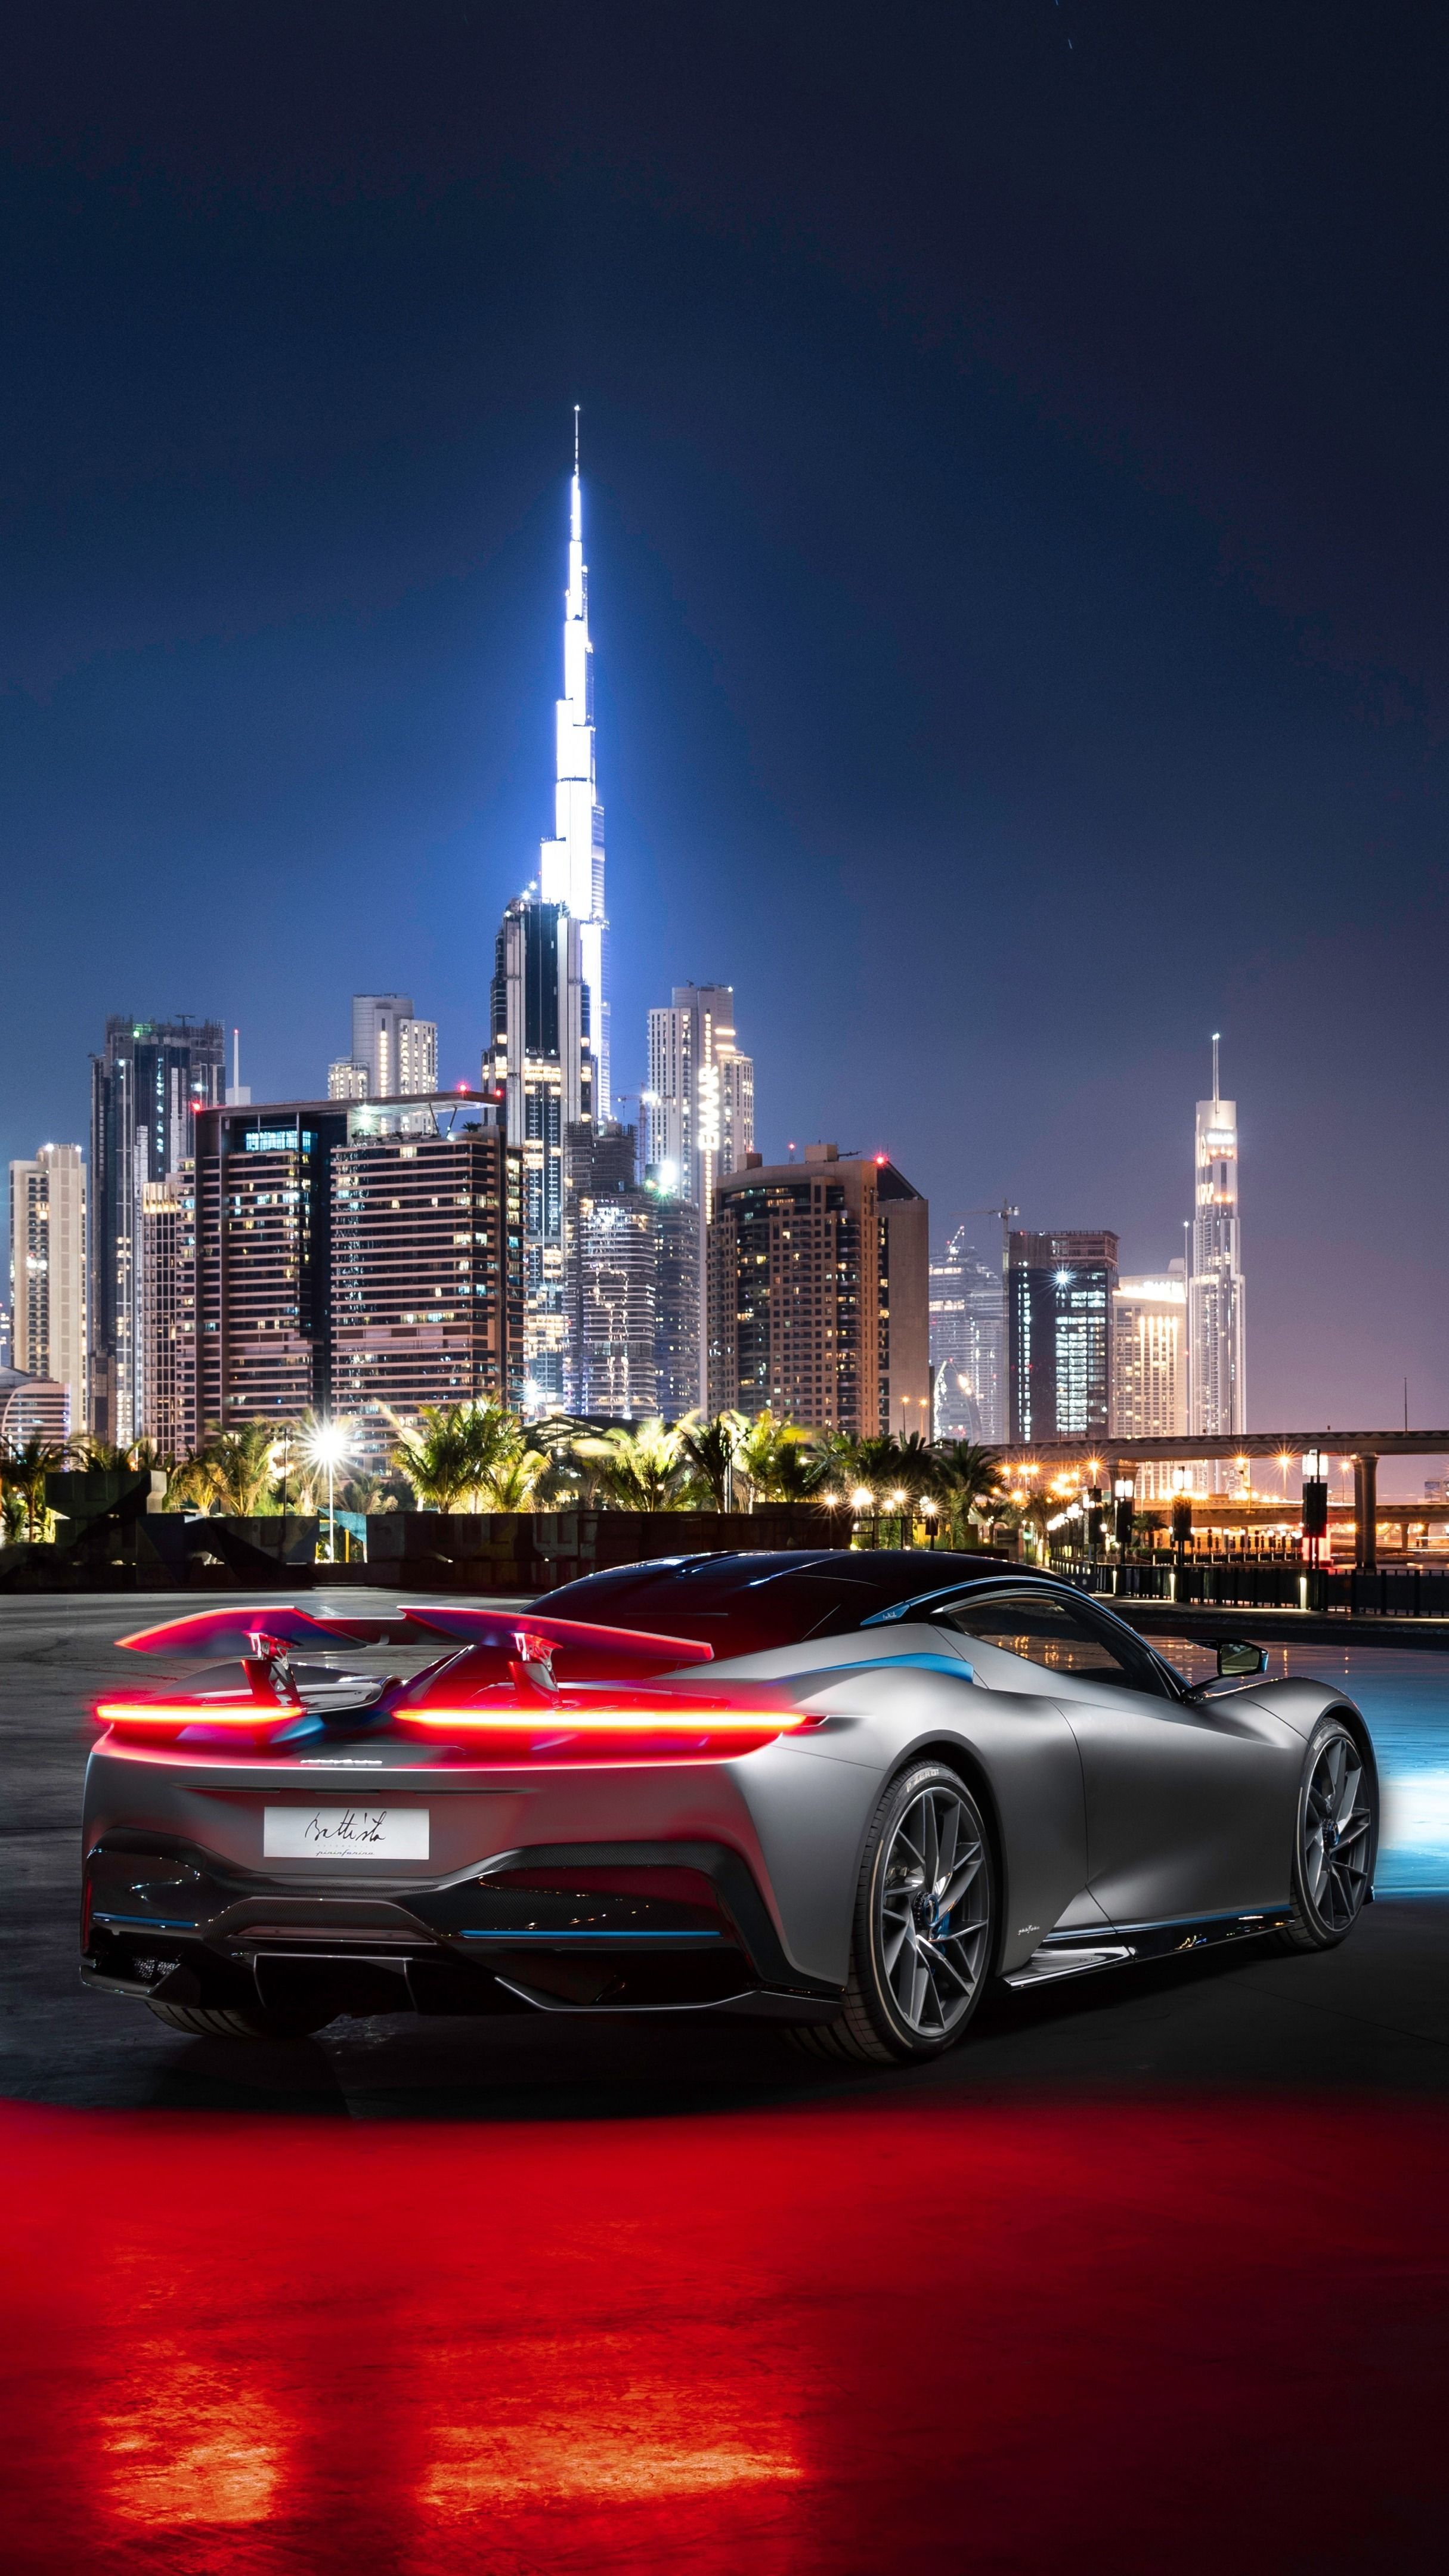 Wallp4k. Car, Electric sports car, Dubai